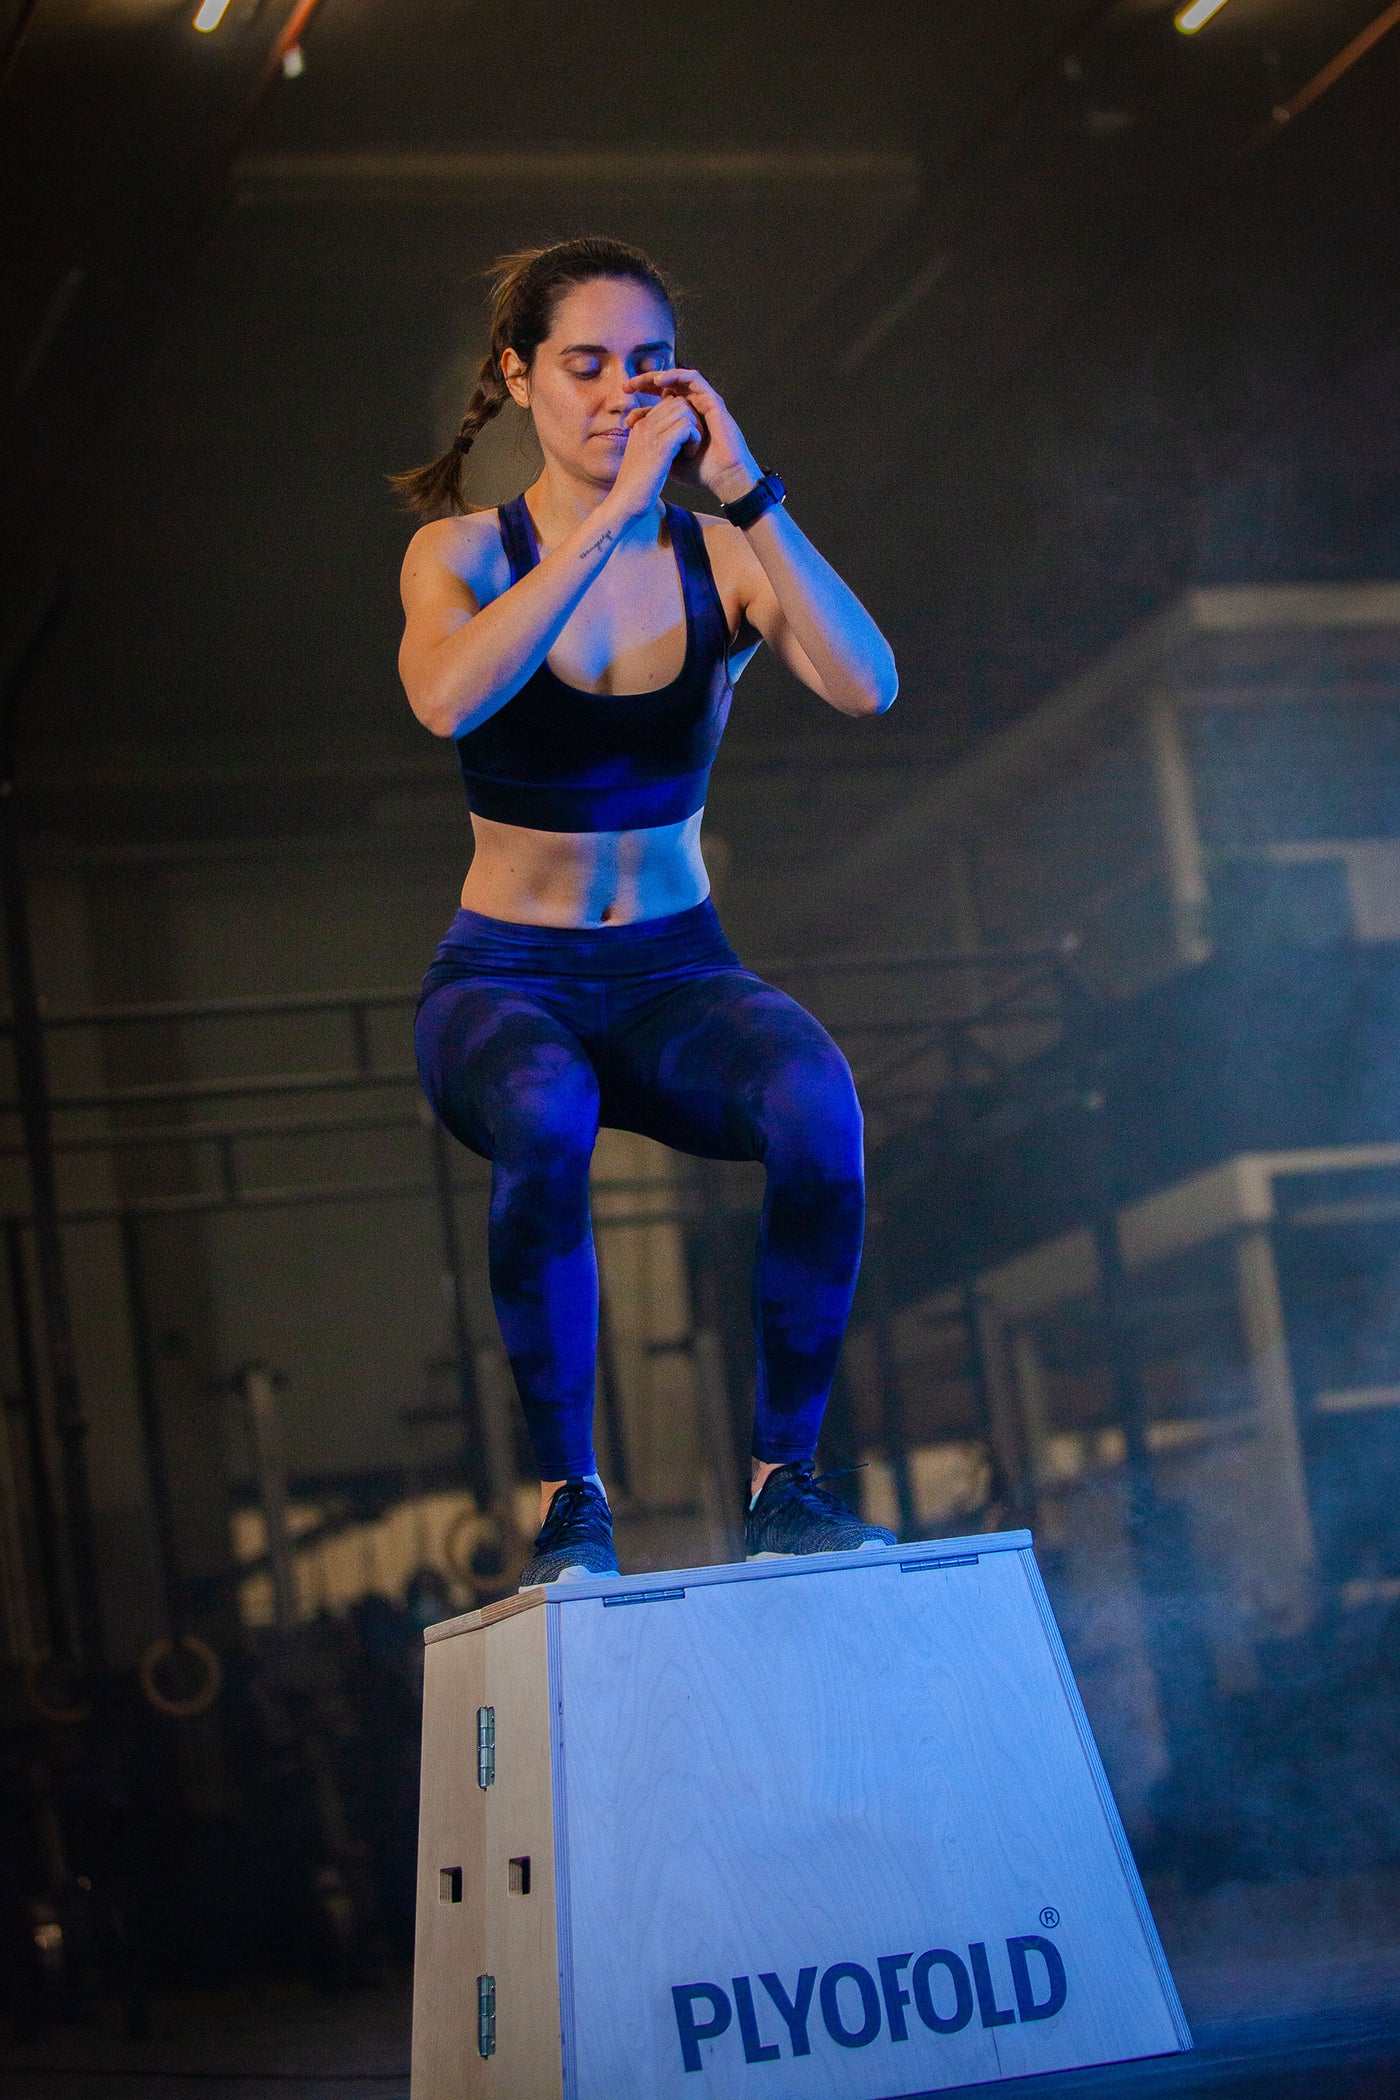 Athlete performing a plyometric box jump onto the Plyofold